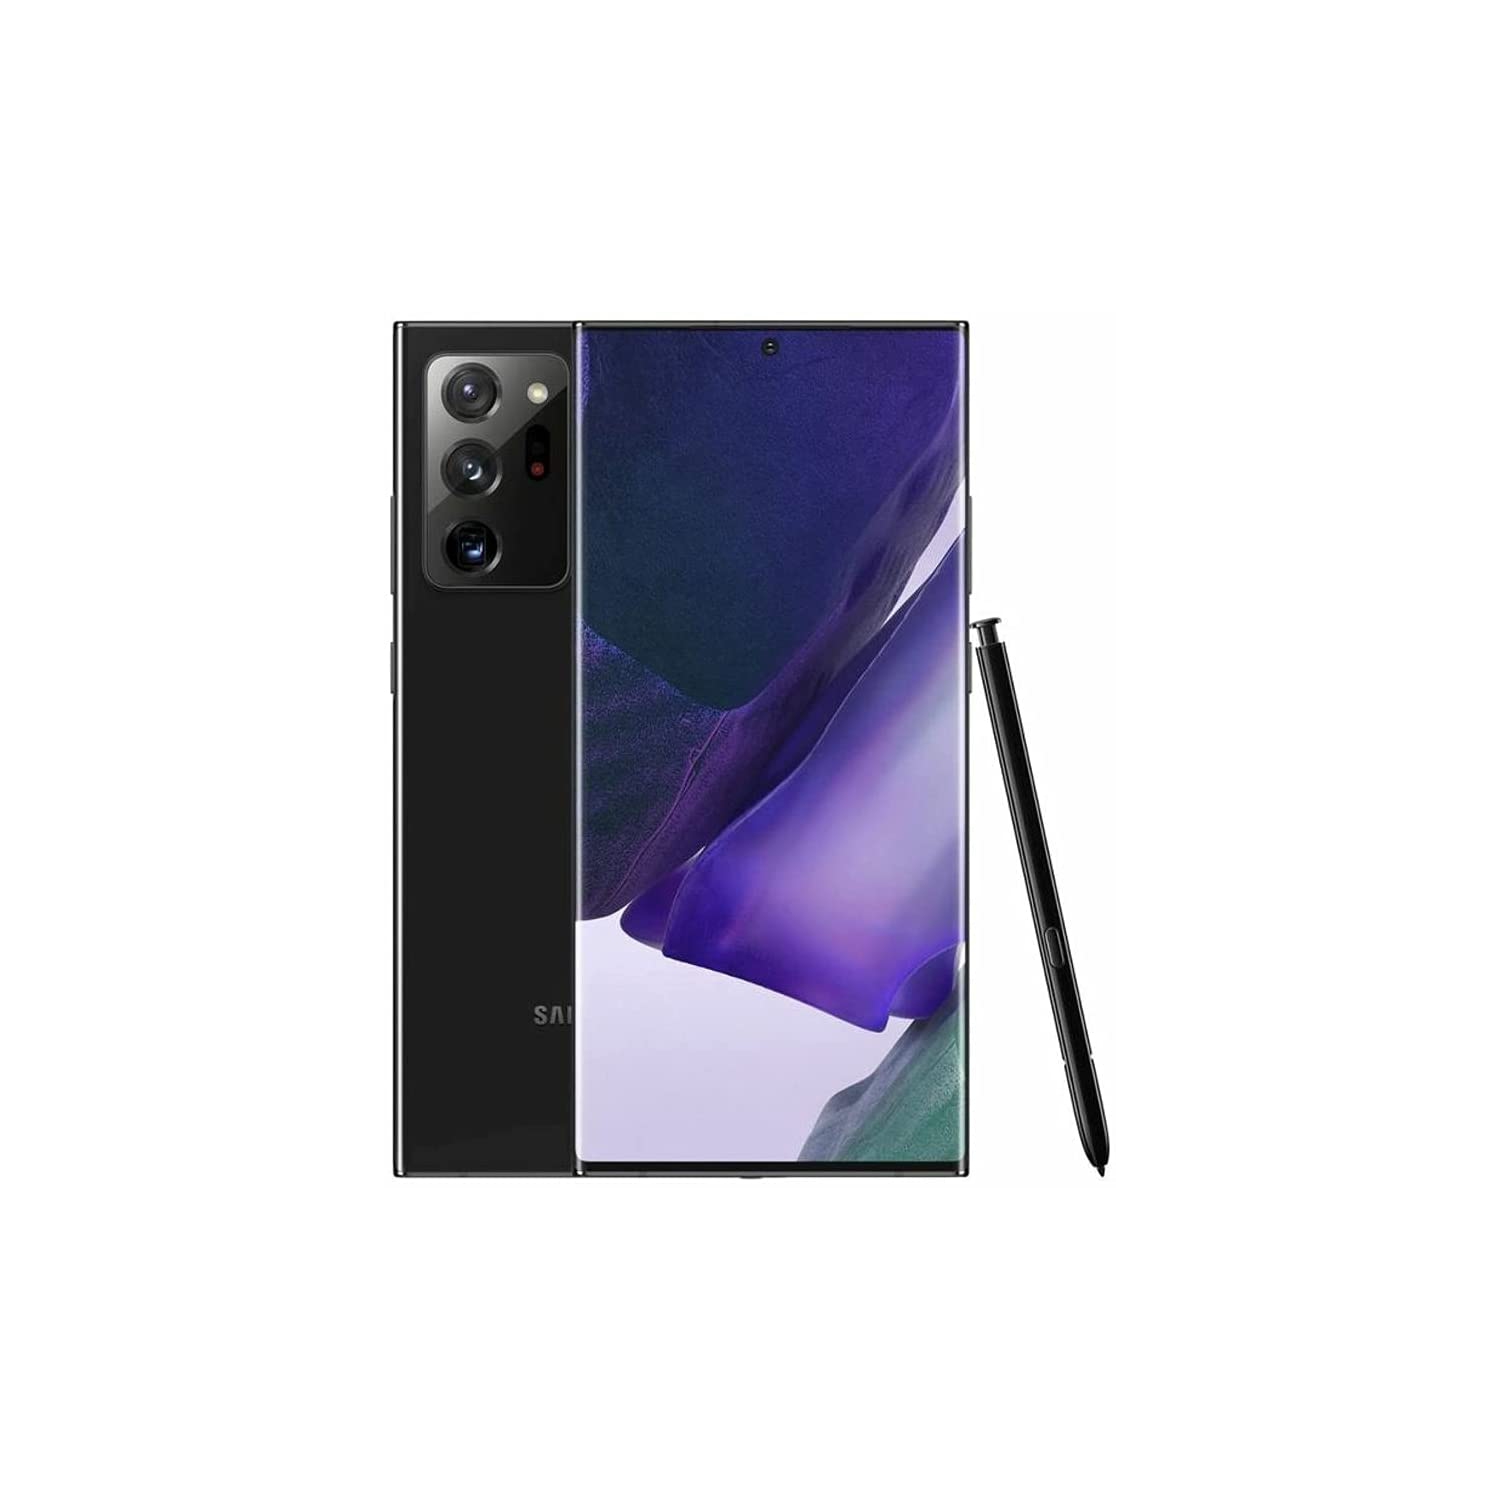 Samsung - Galaxy Note 20 Ultra - 256GB - International Model - 6.9' Dynamic AMOLED 2X | Factory Unlocked | Smartphone - Dual Sim - Brand New - Mystic - 108mp - Black